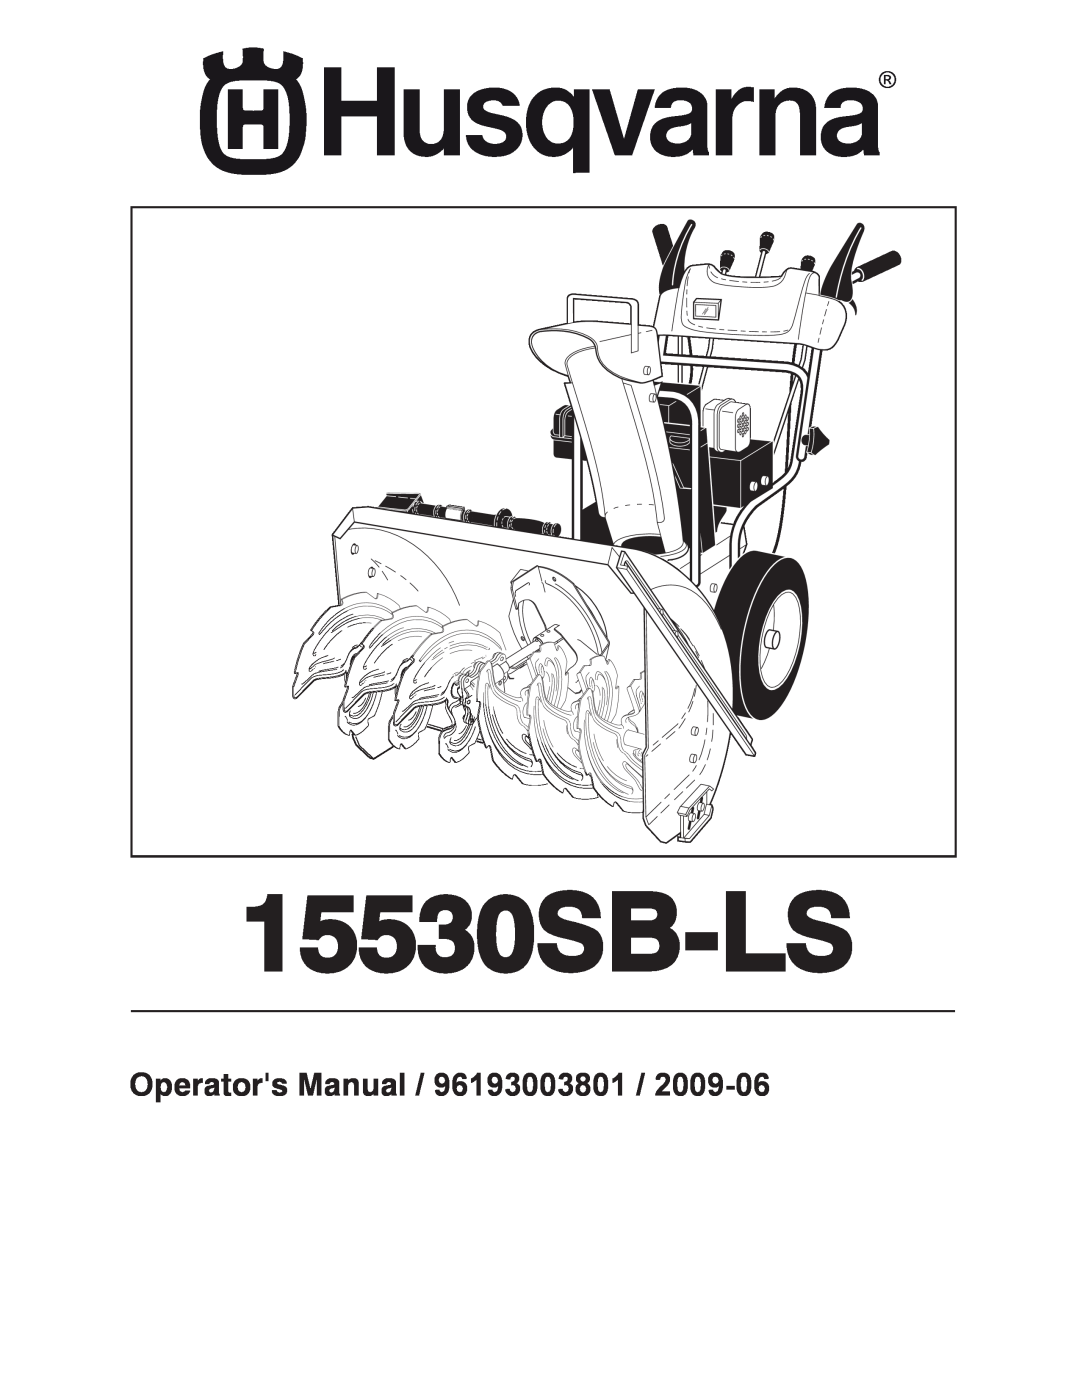 Husqvarna 15530SB-LS manual Operators Manual 